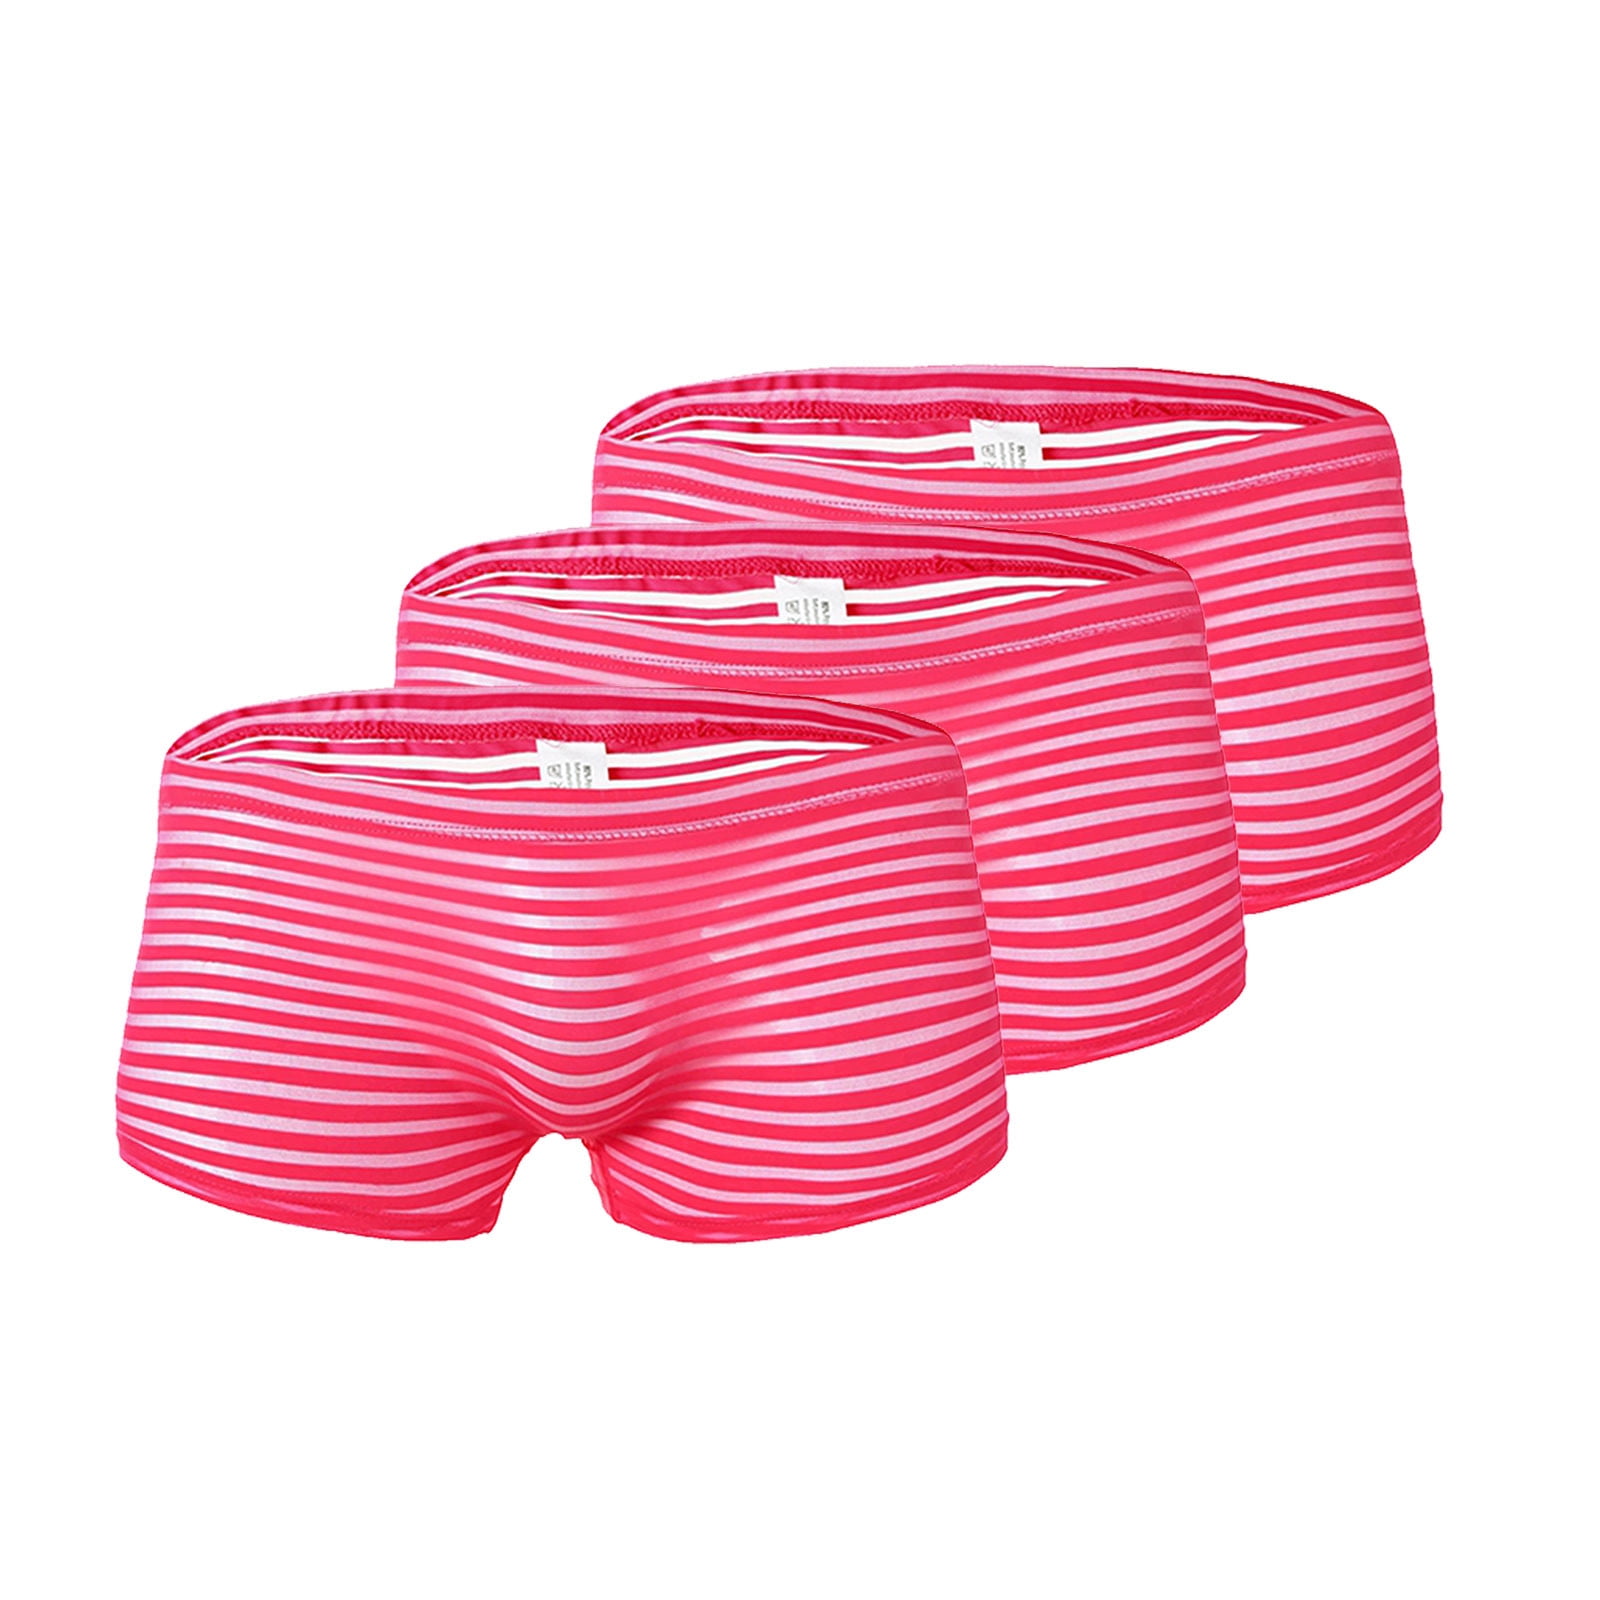 GIERIDUC Men's Stretch Thong Underwear Different Types Of Men's Underwear  Mens Boxers With Designs Mens Pink Boxer Briefs